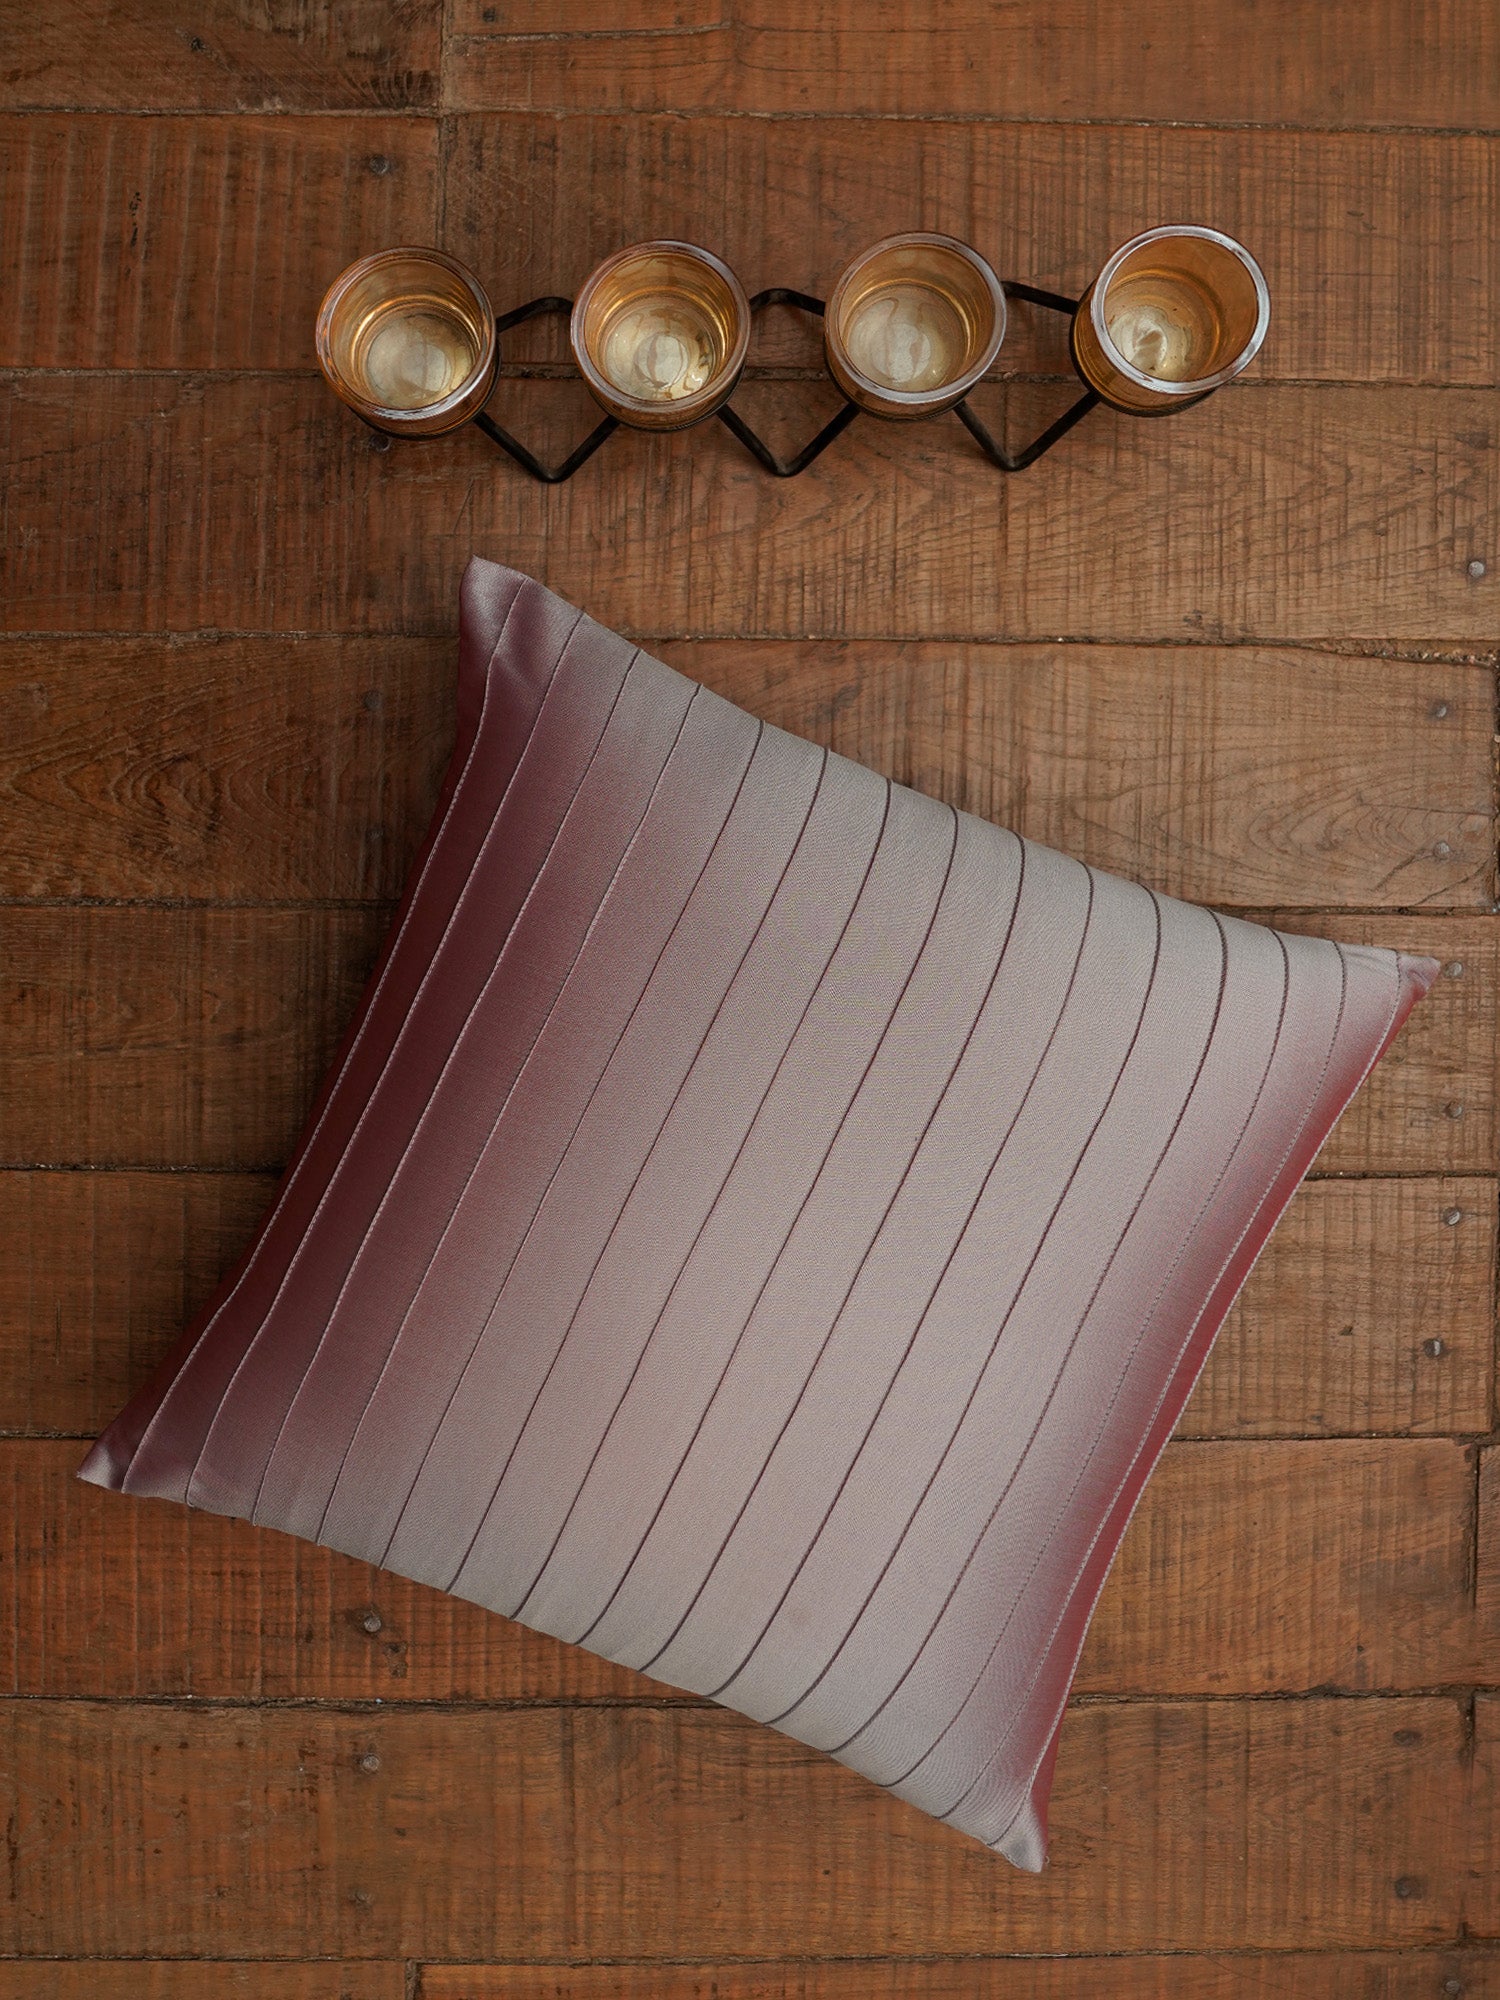 Technique Cushion Cover Pintuck Polyester Grey - 16" X 16"